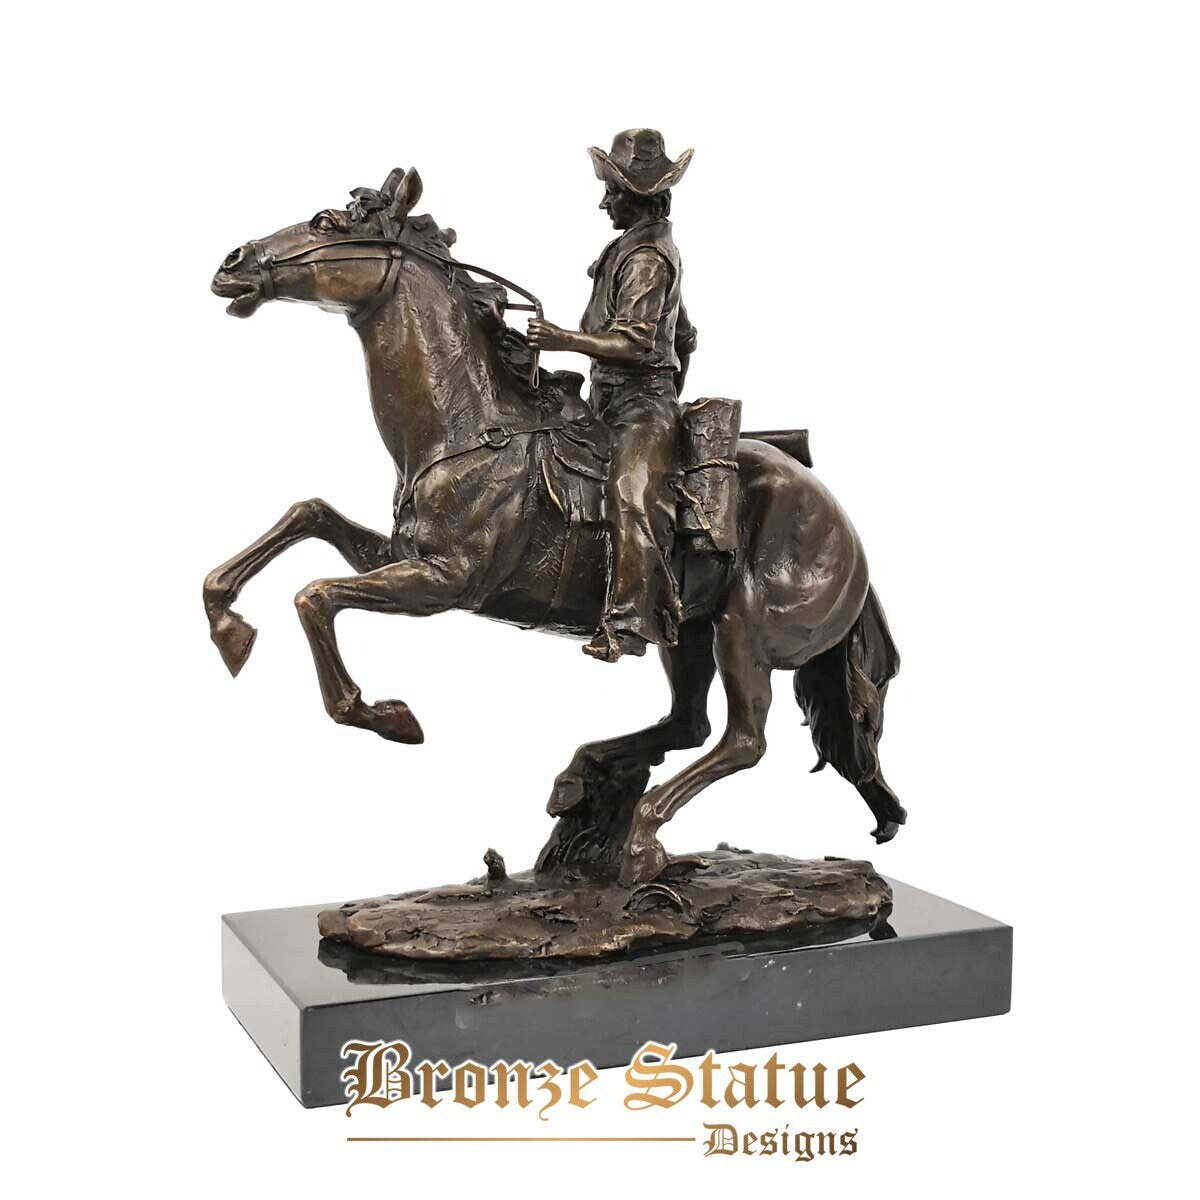 Western cowboy with gun ridding statue vintage man sculpture art marble base gorgeous office table decoration